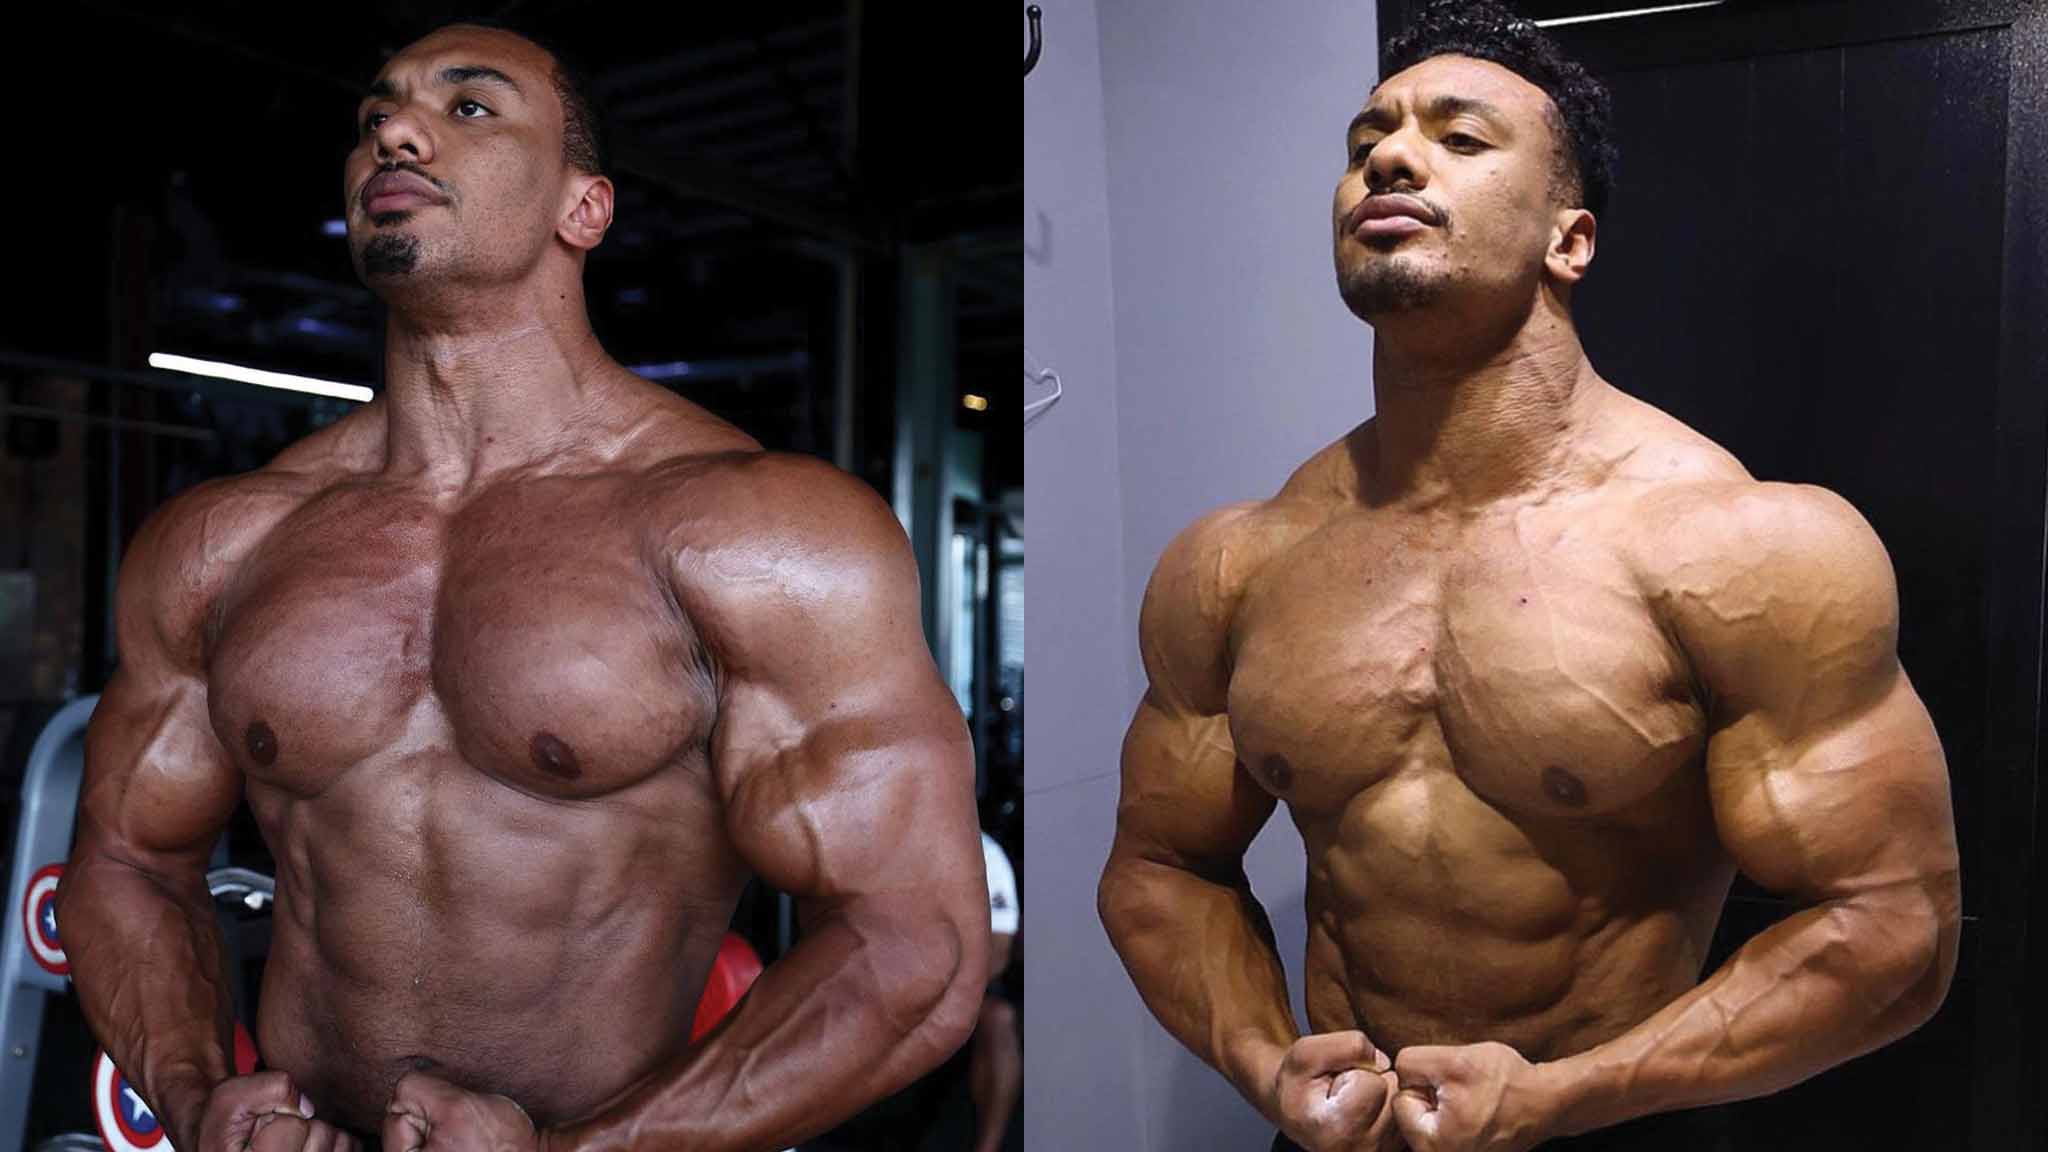 Larry Wheels Physique Testosterone Comparison bodybuilding